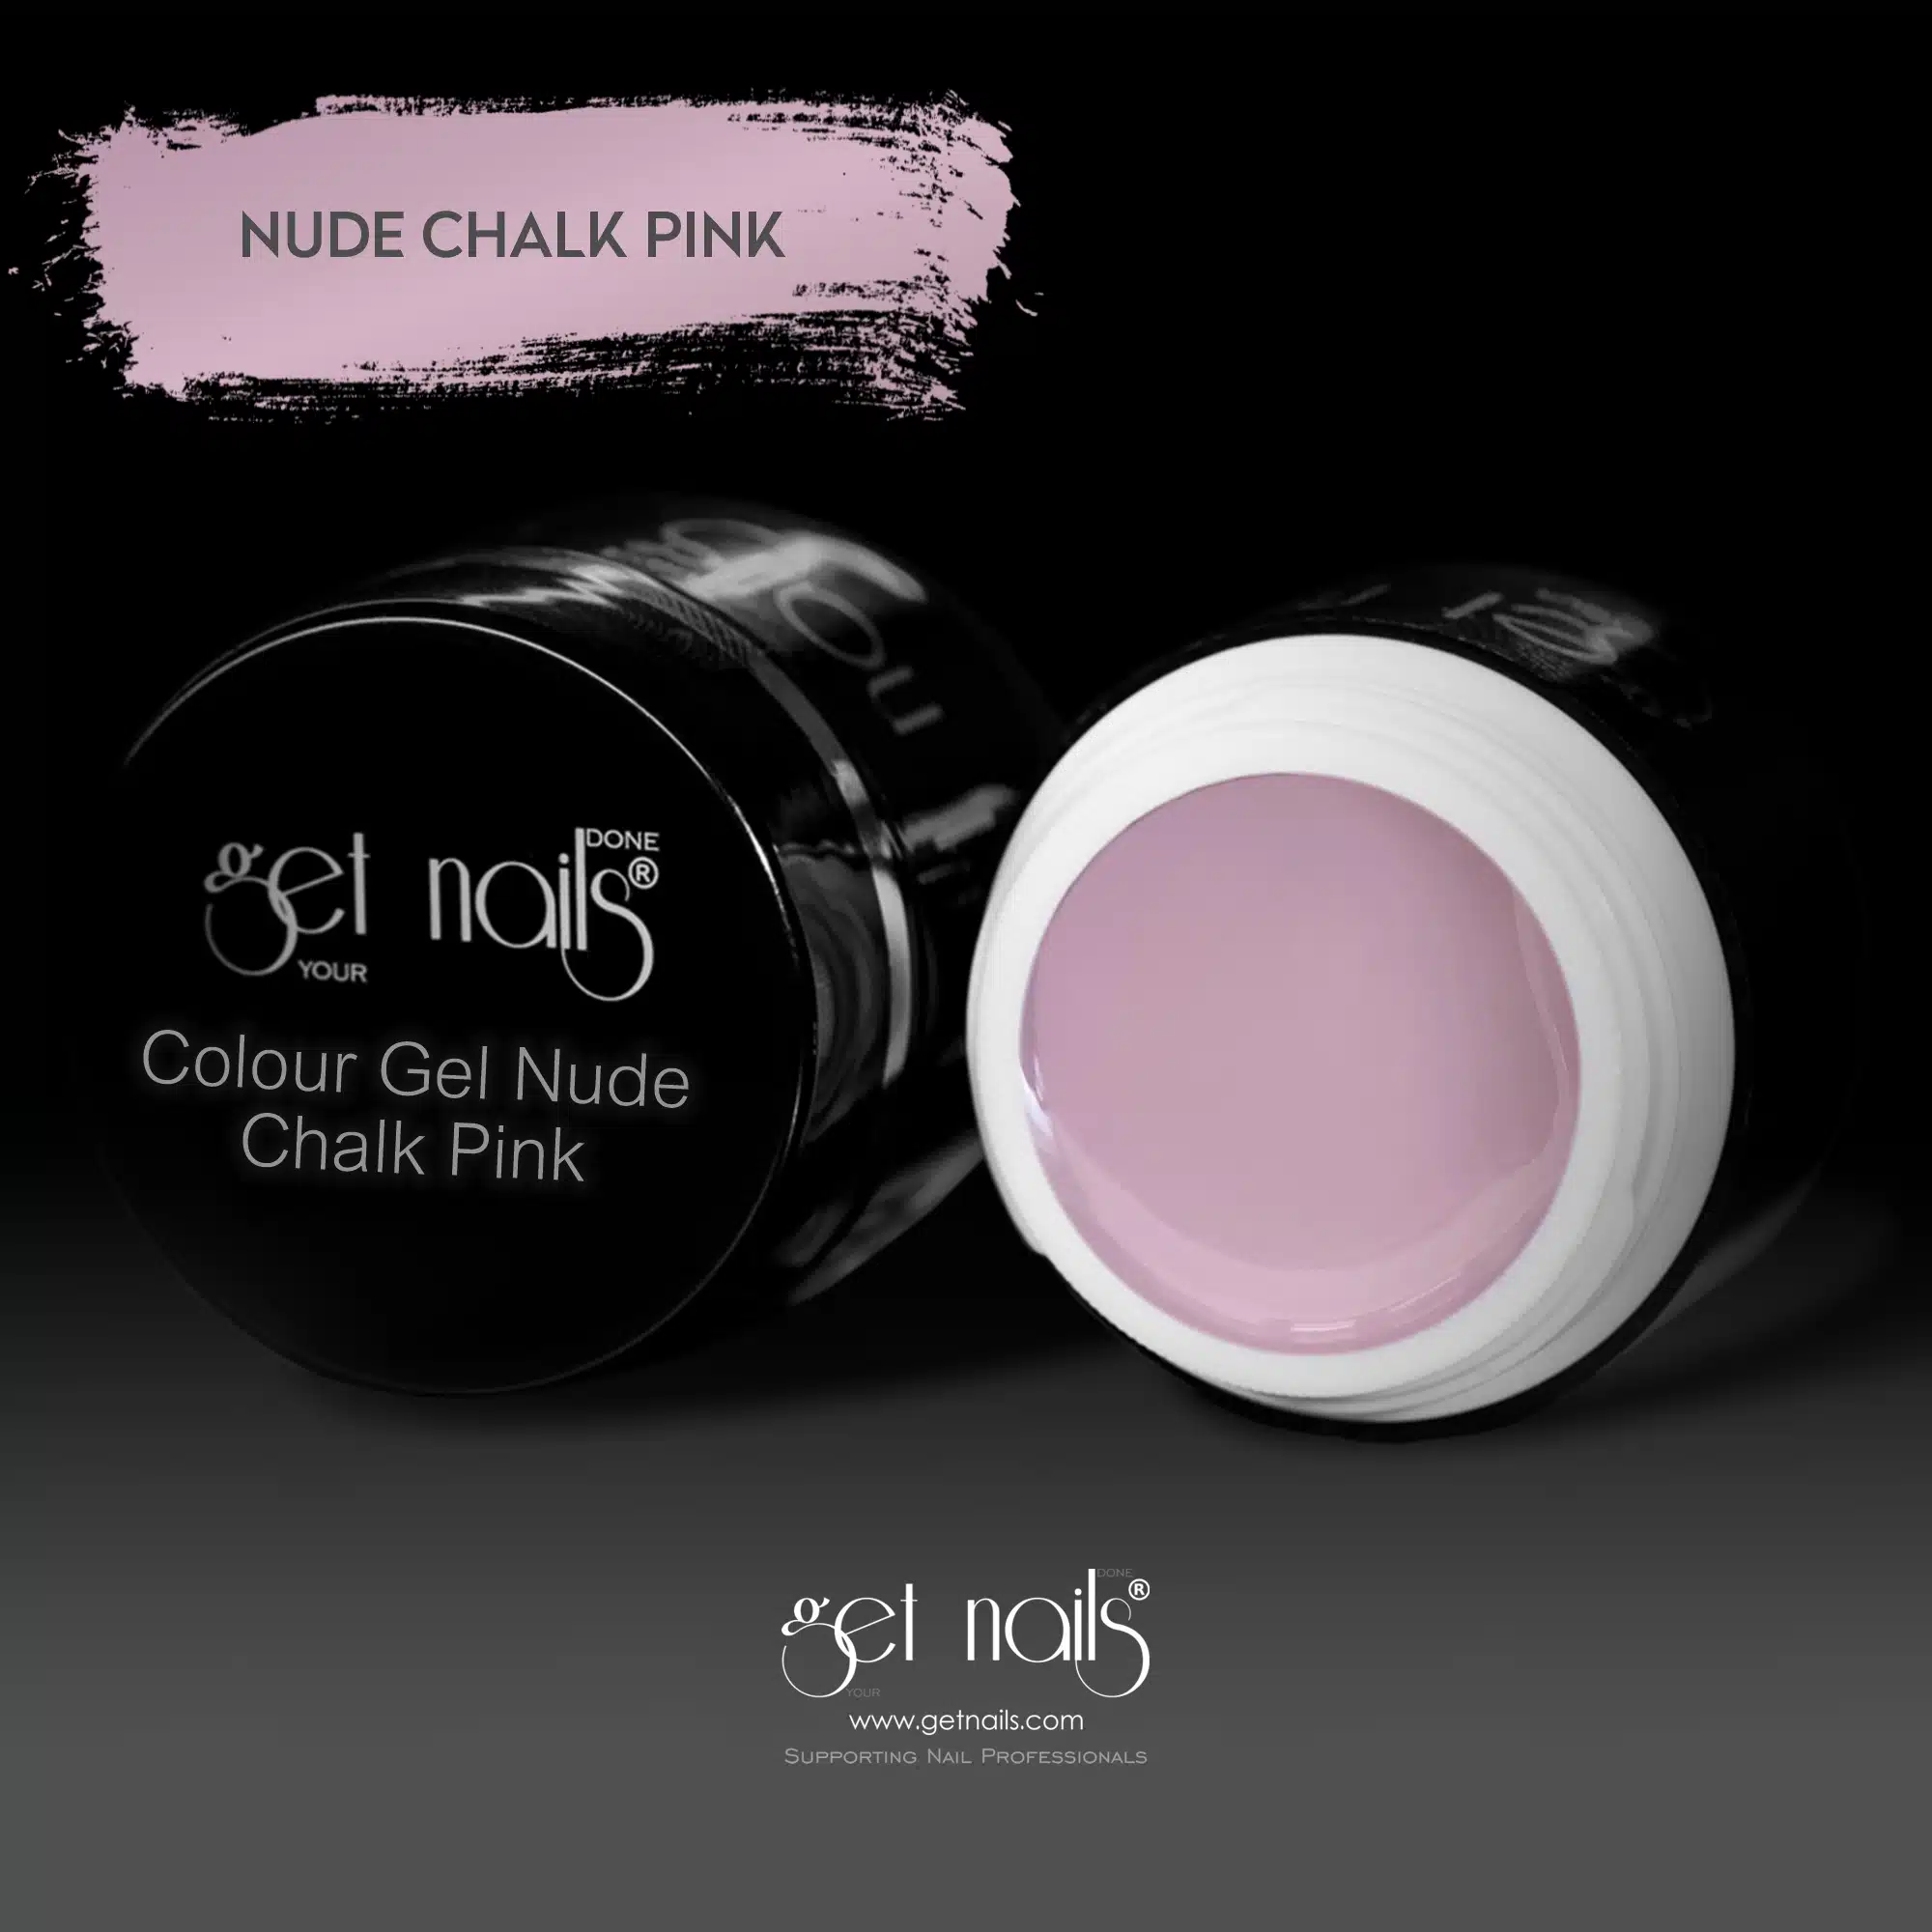 Get Nails Austria - Цветной гель Nude Chalk Pink 5g